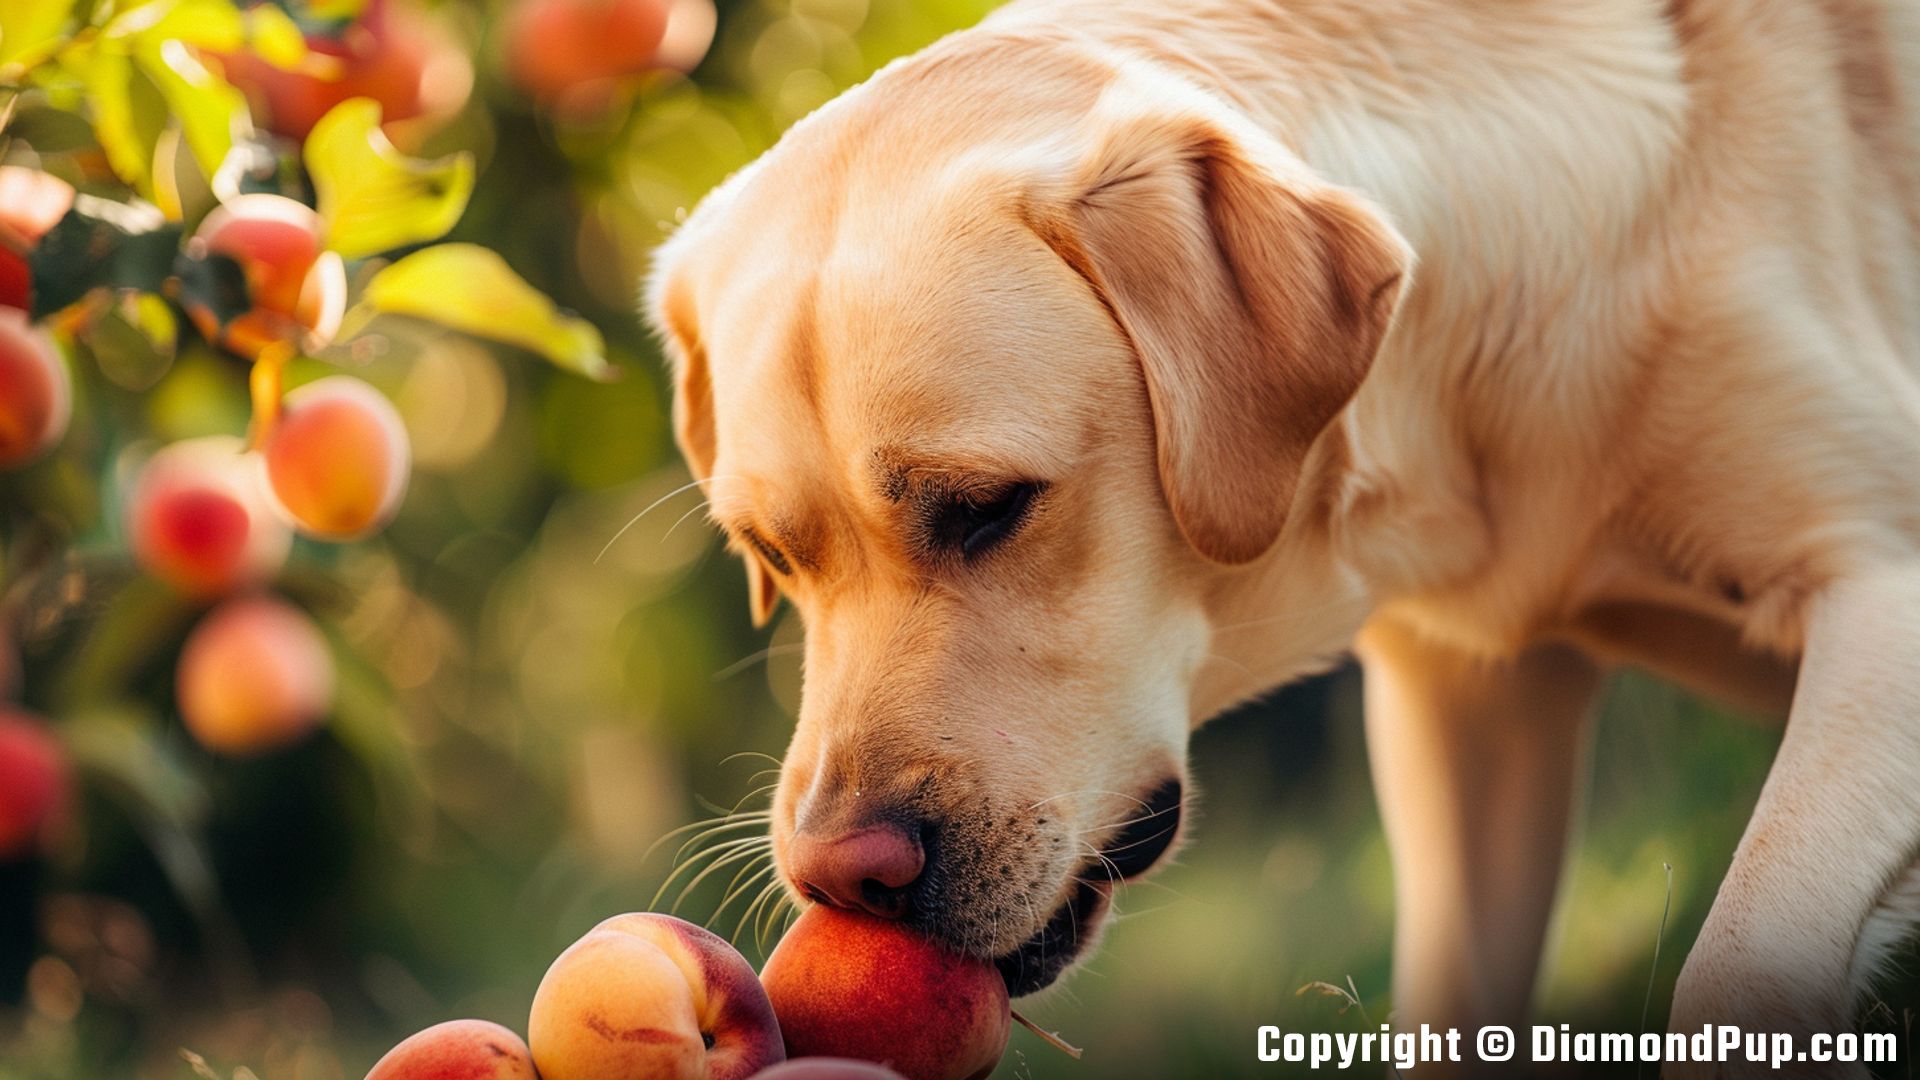 Image of an Adorable Labrador Snacking on Peaches